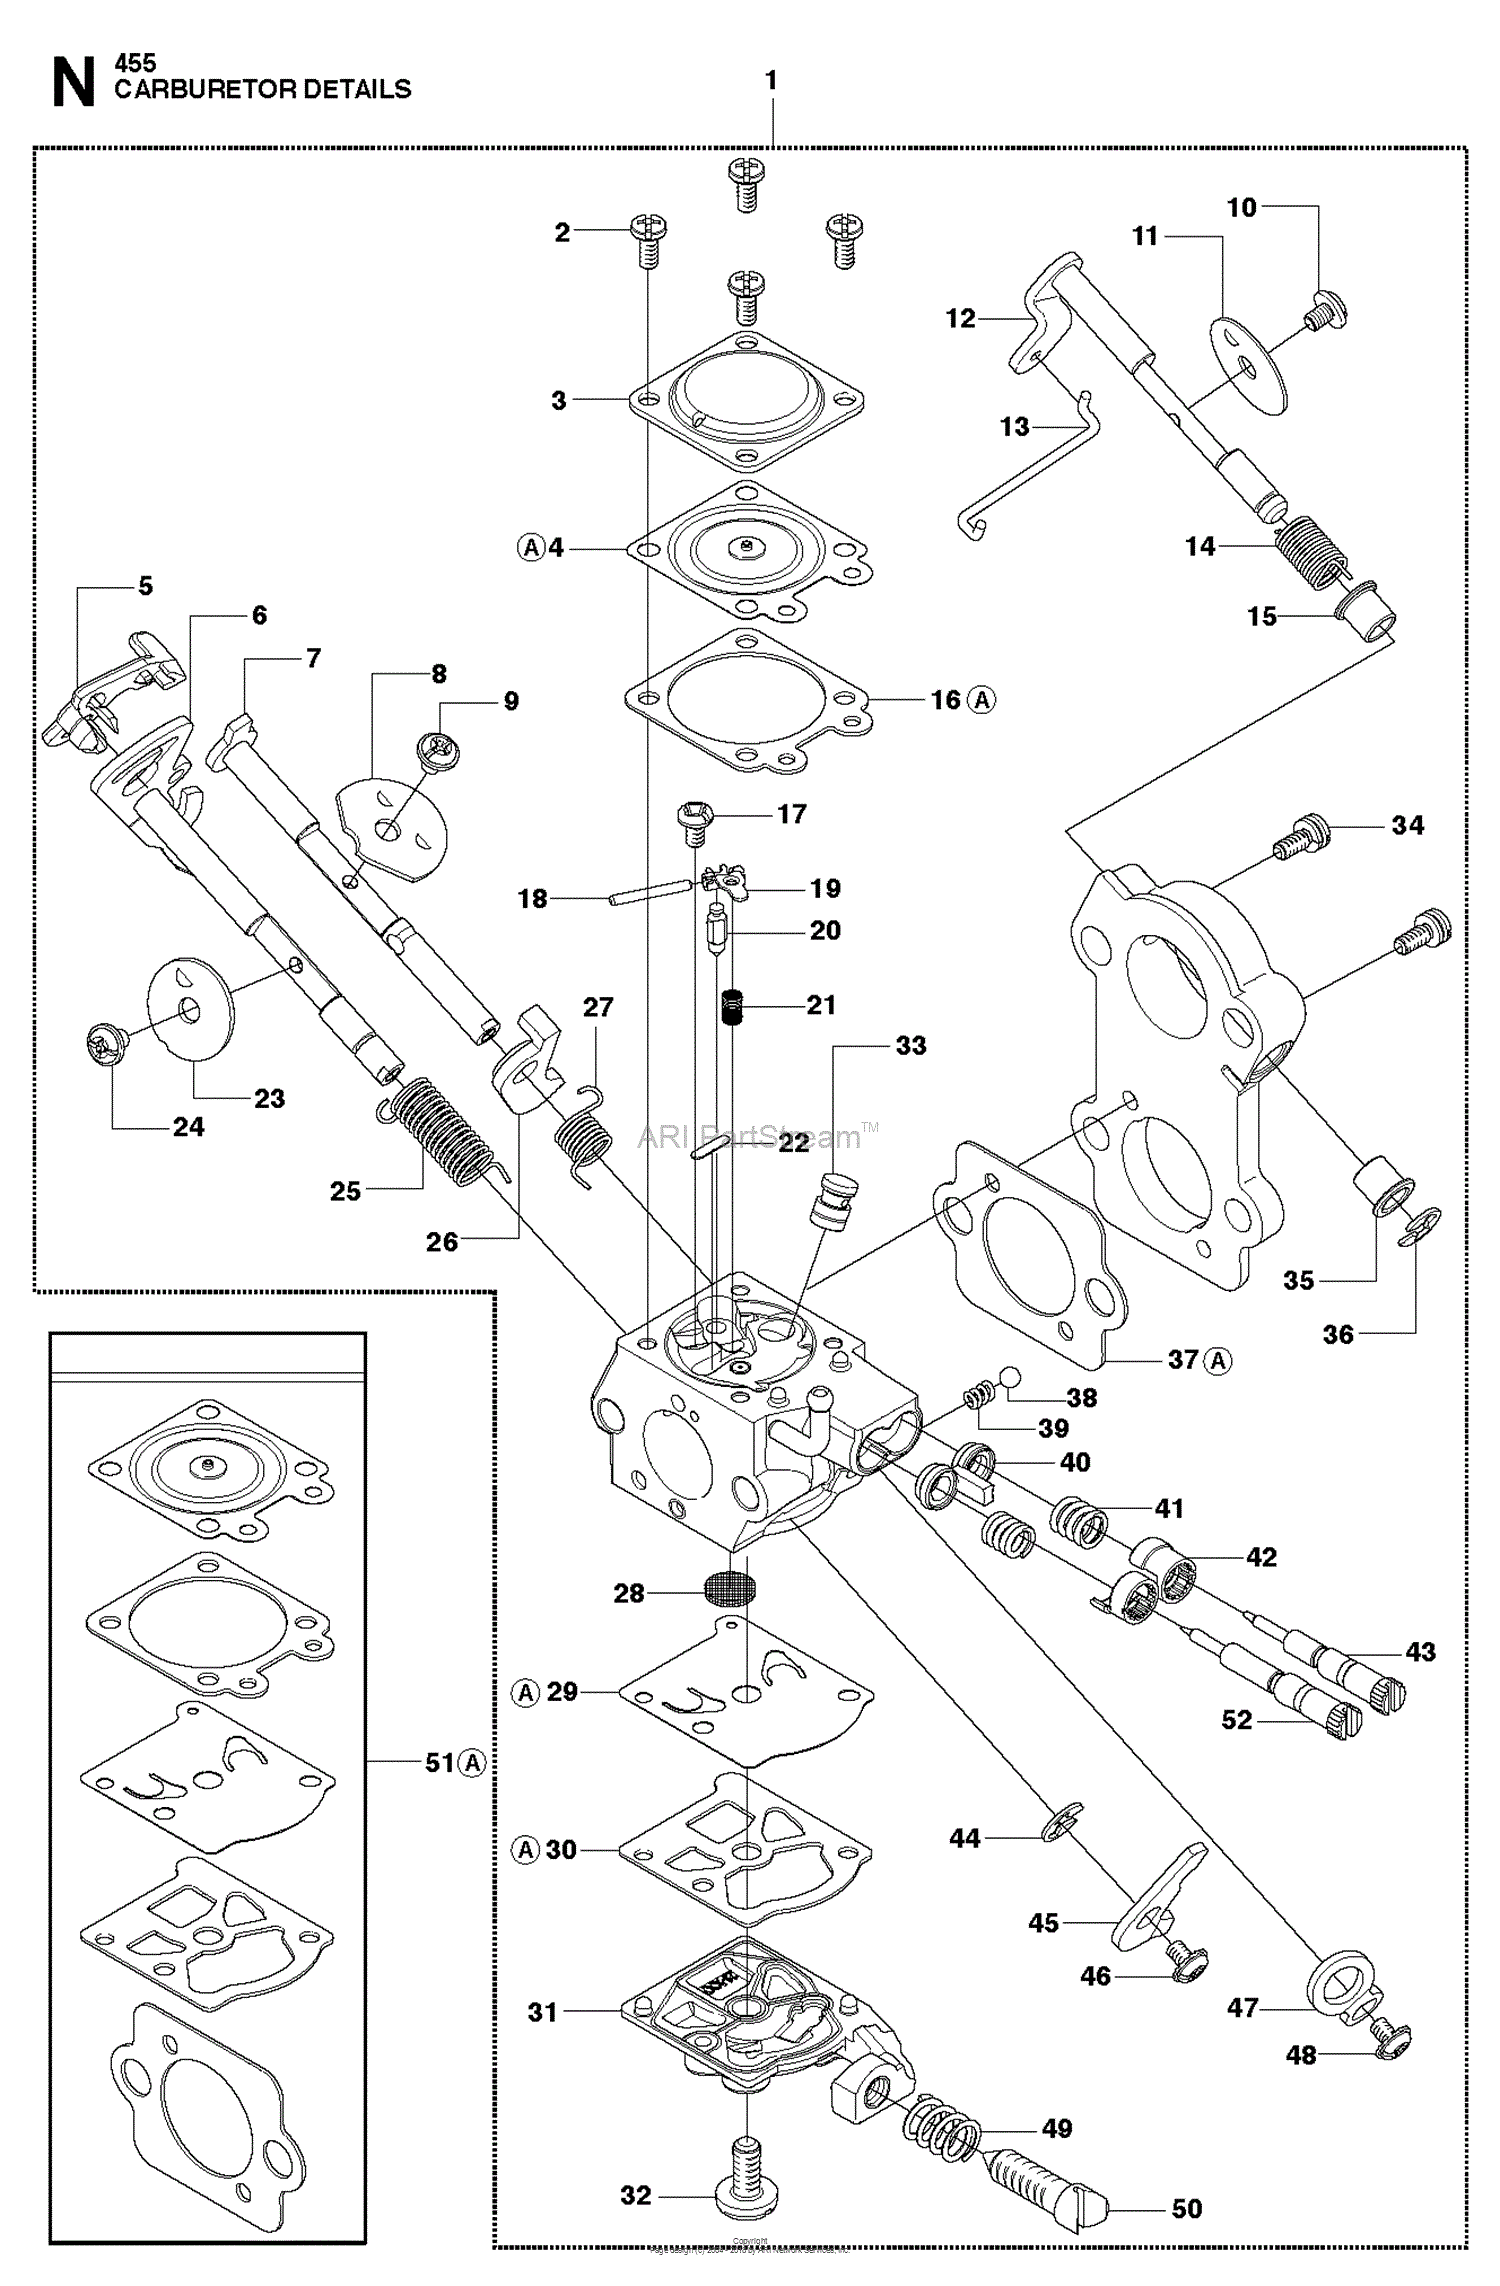 OEM Details about   Husqvarna 455 Chainsaw Carburetor/Carb  Boot  Parts